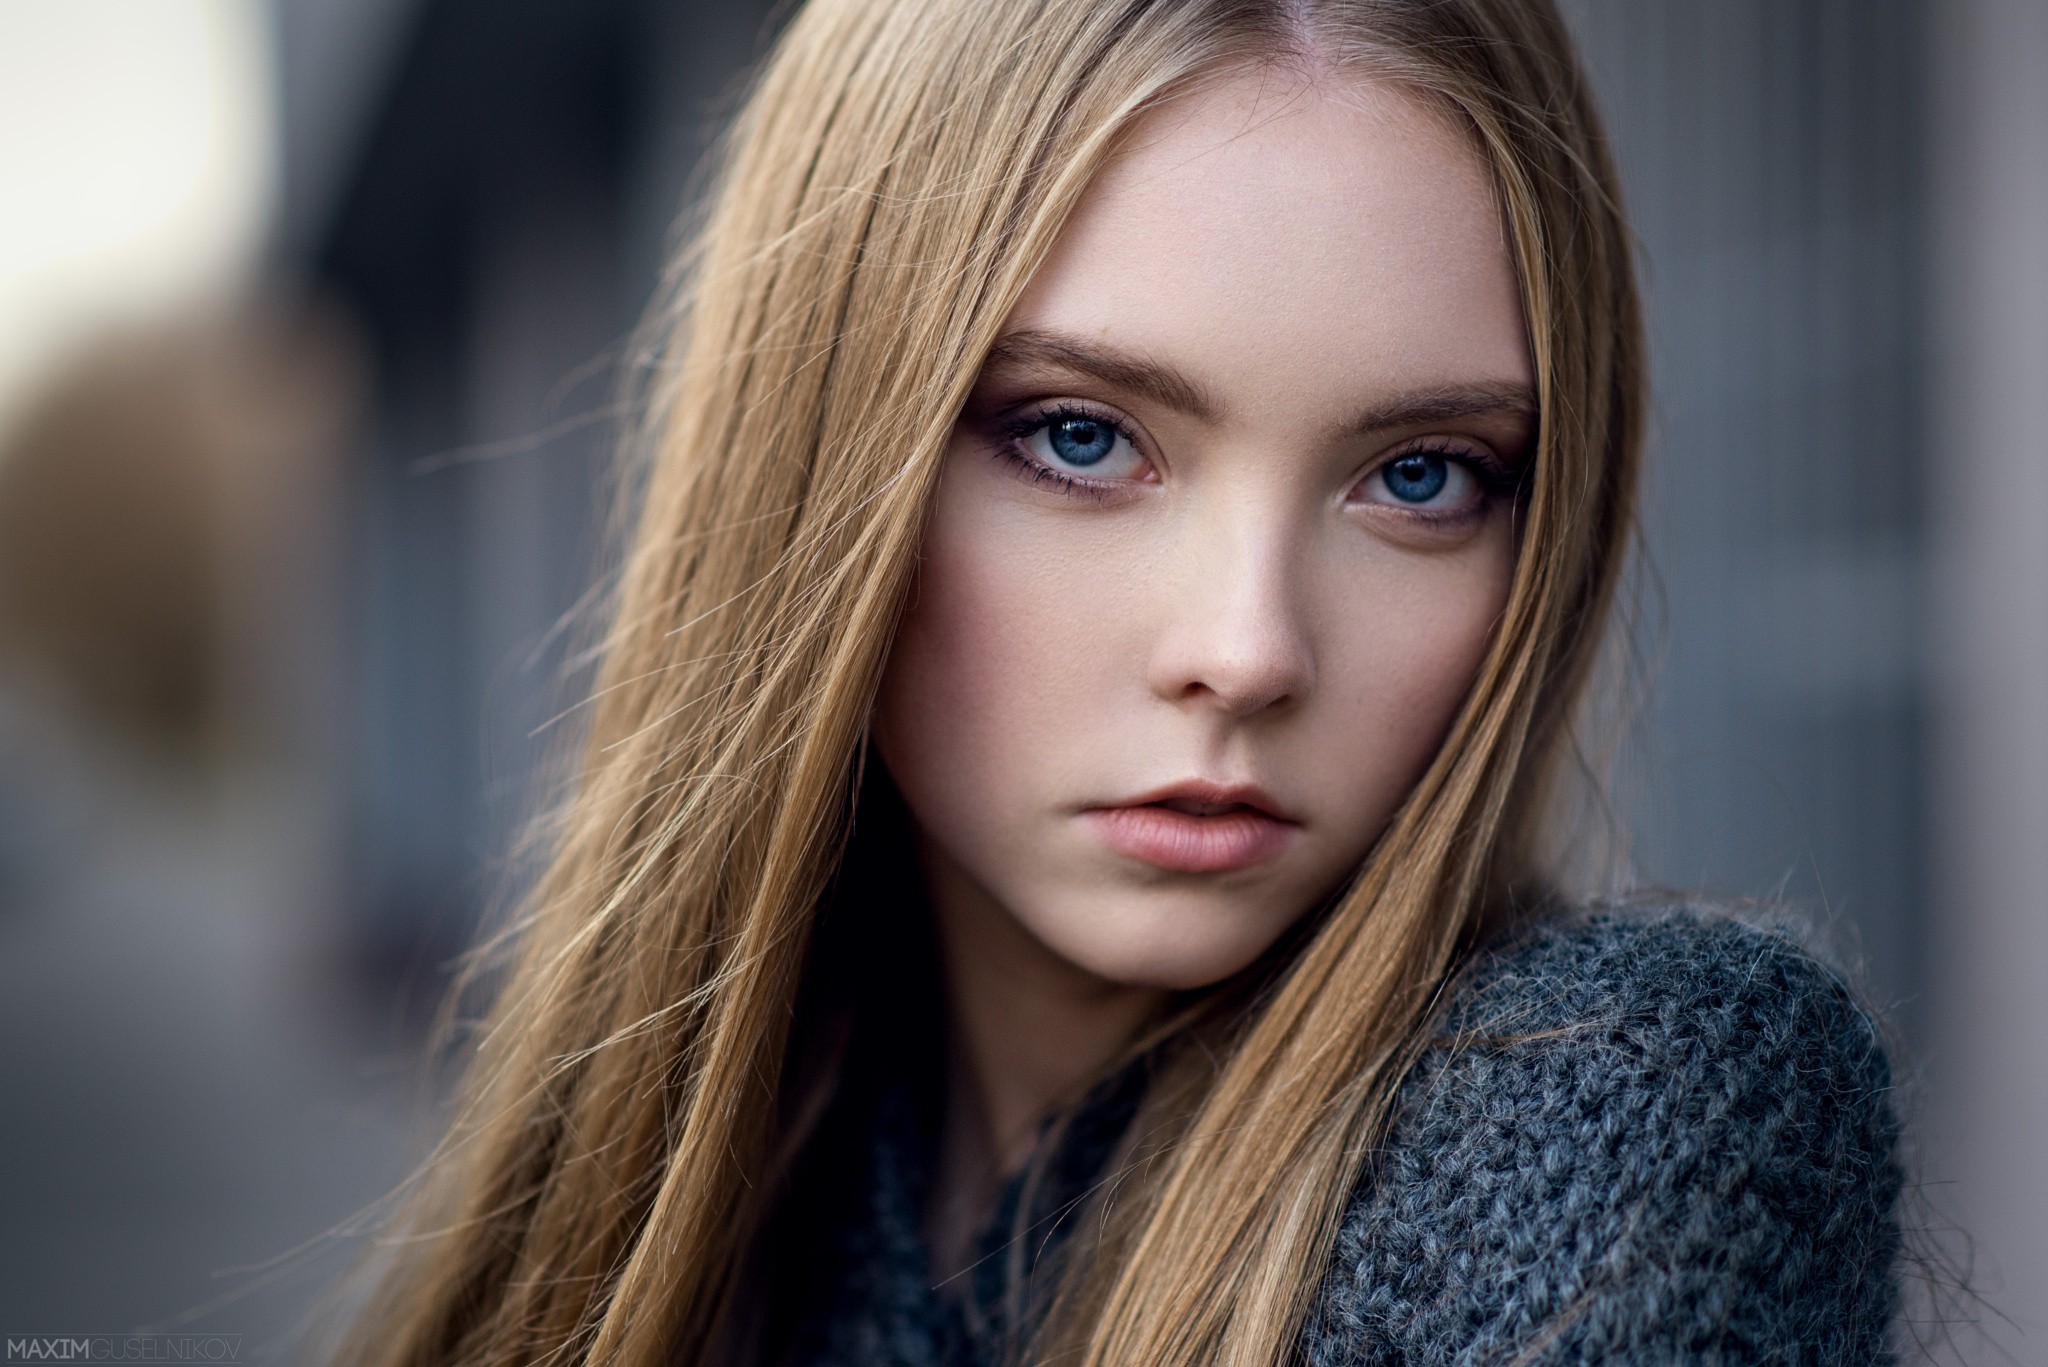 People 2048x1367 sweater blue eyes blonde women Maxim Guselnikov looking at viewer face closeup women outdoors model long hair